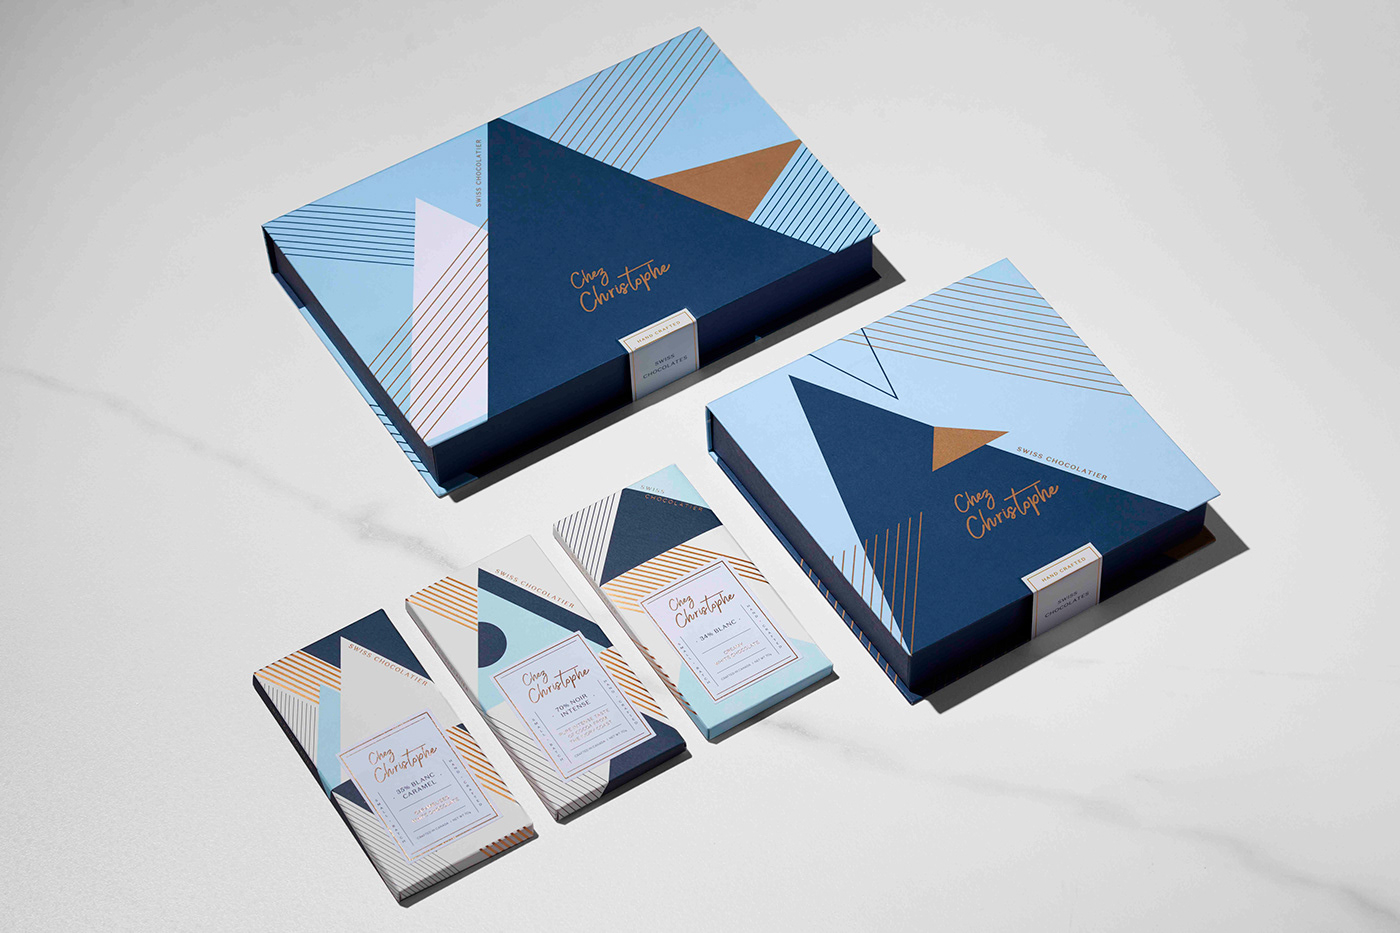 Packaging example #332: Chocolate Packaging Design